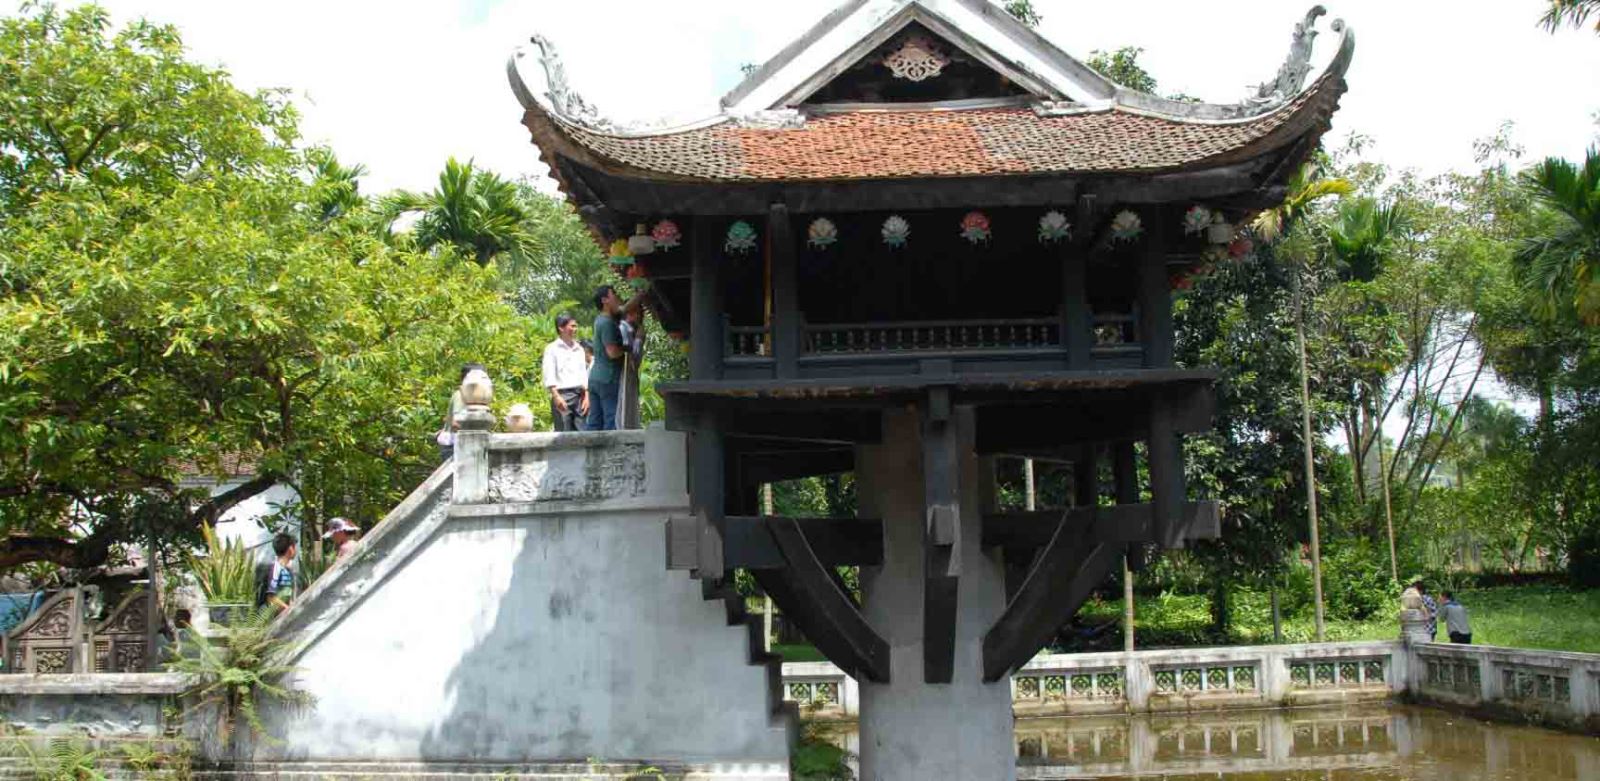 La pagoda dal pilastro unico